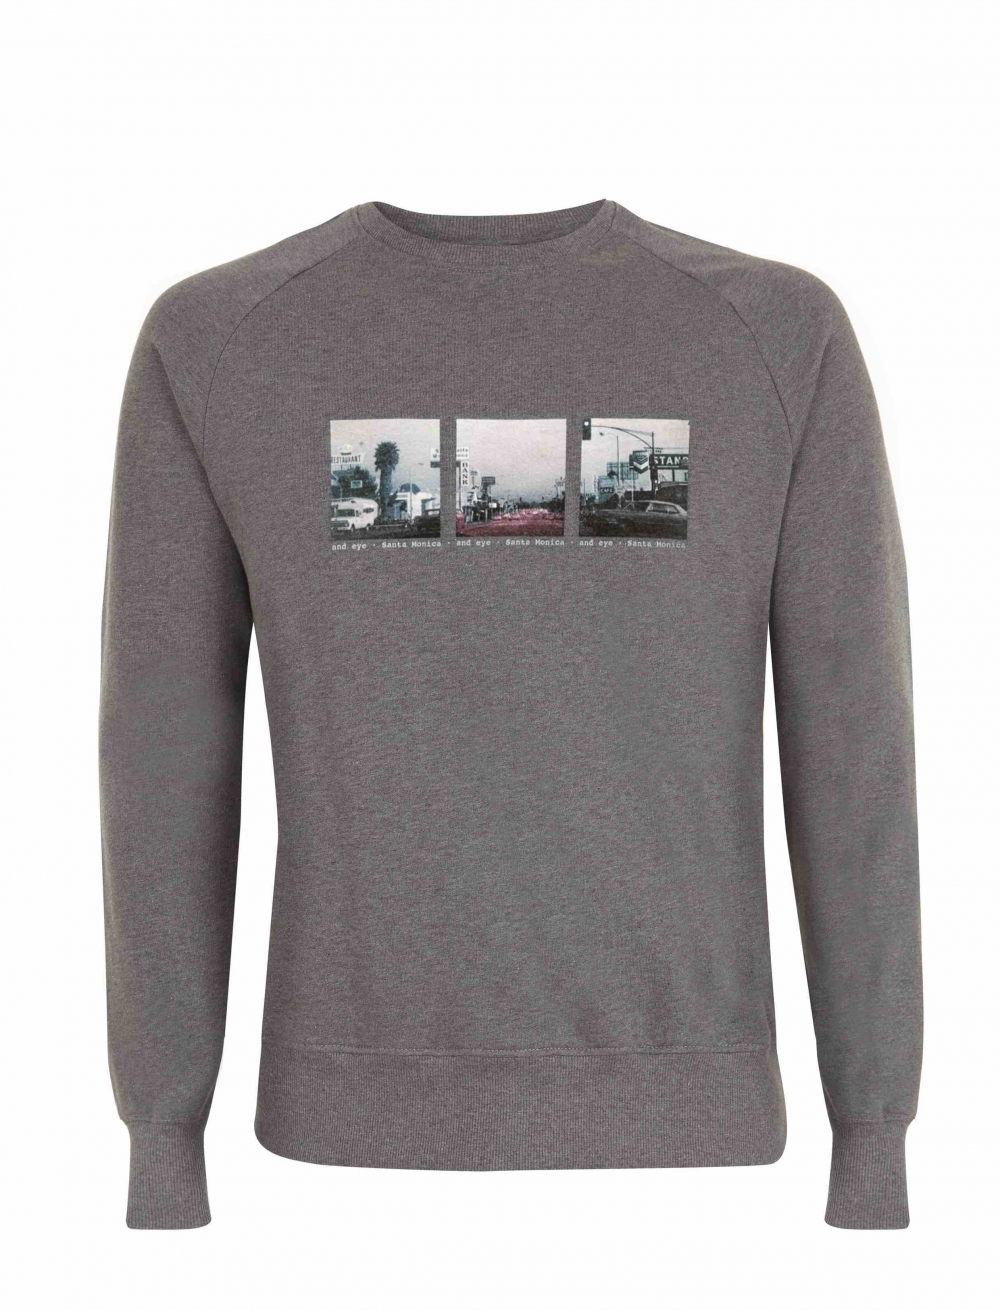 Organic cotton sweatshirt with a vintage image of Santa Monica